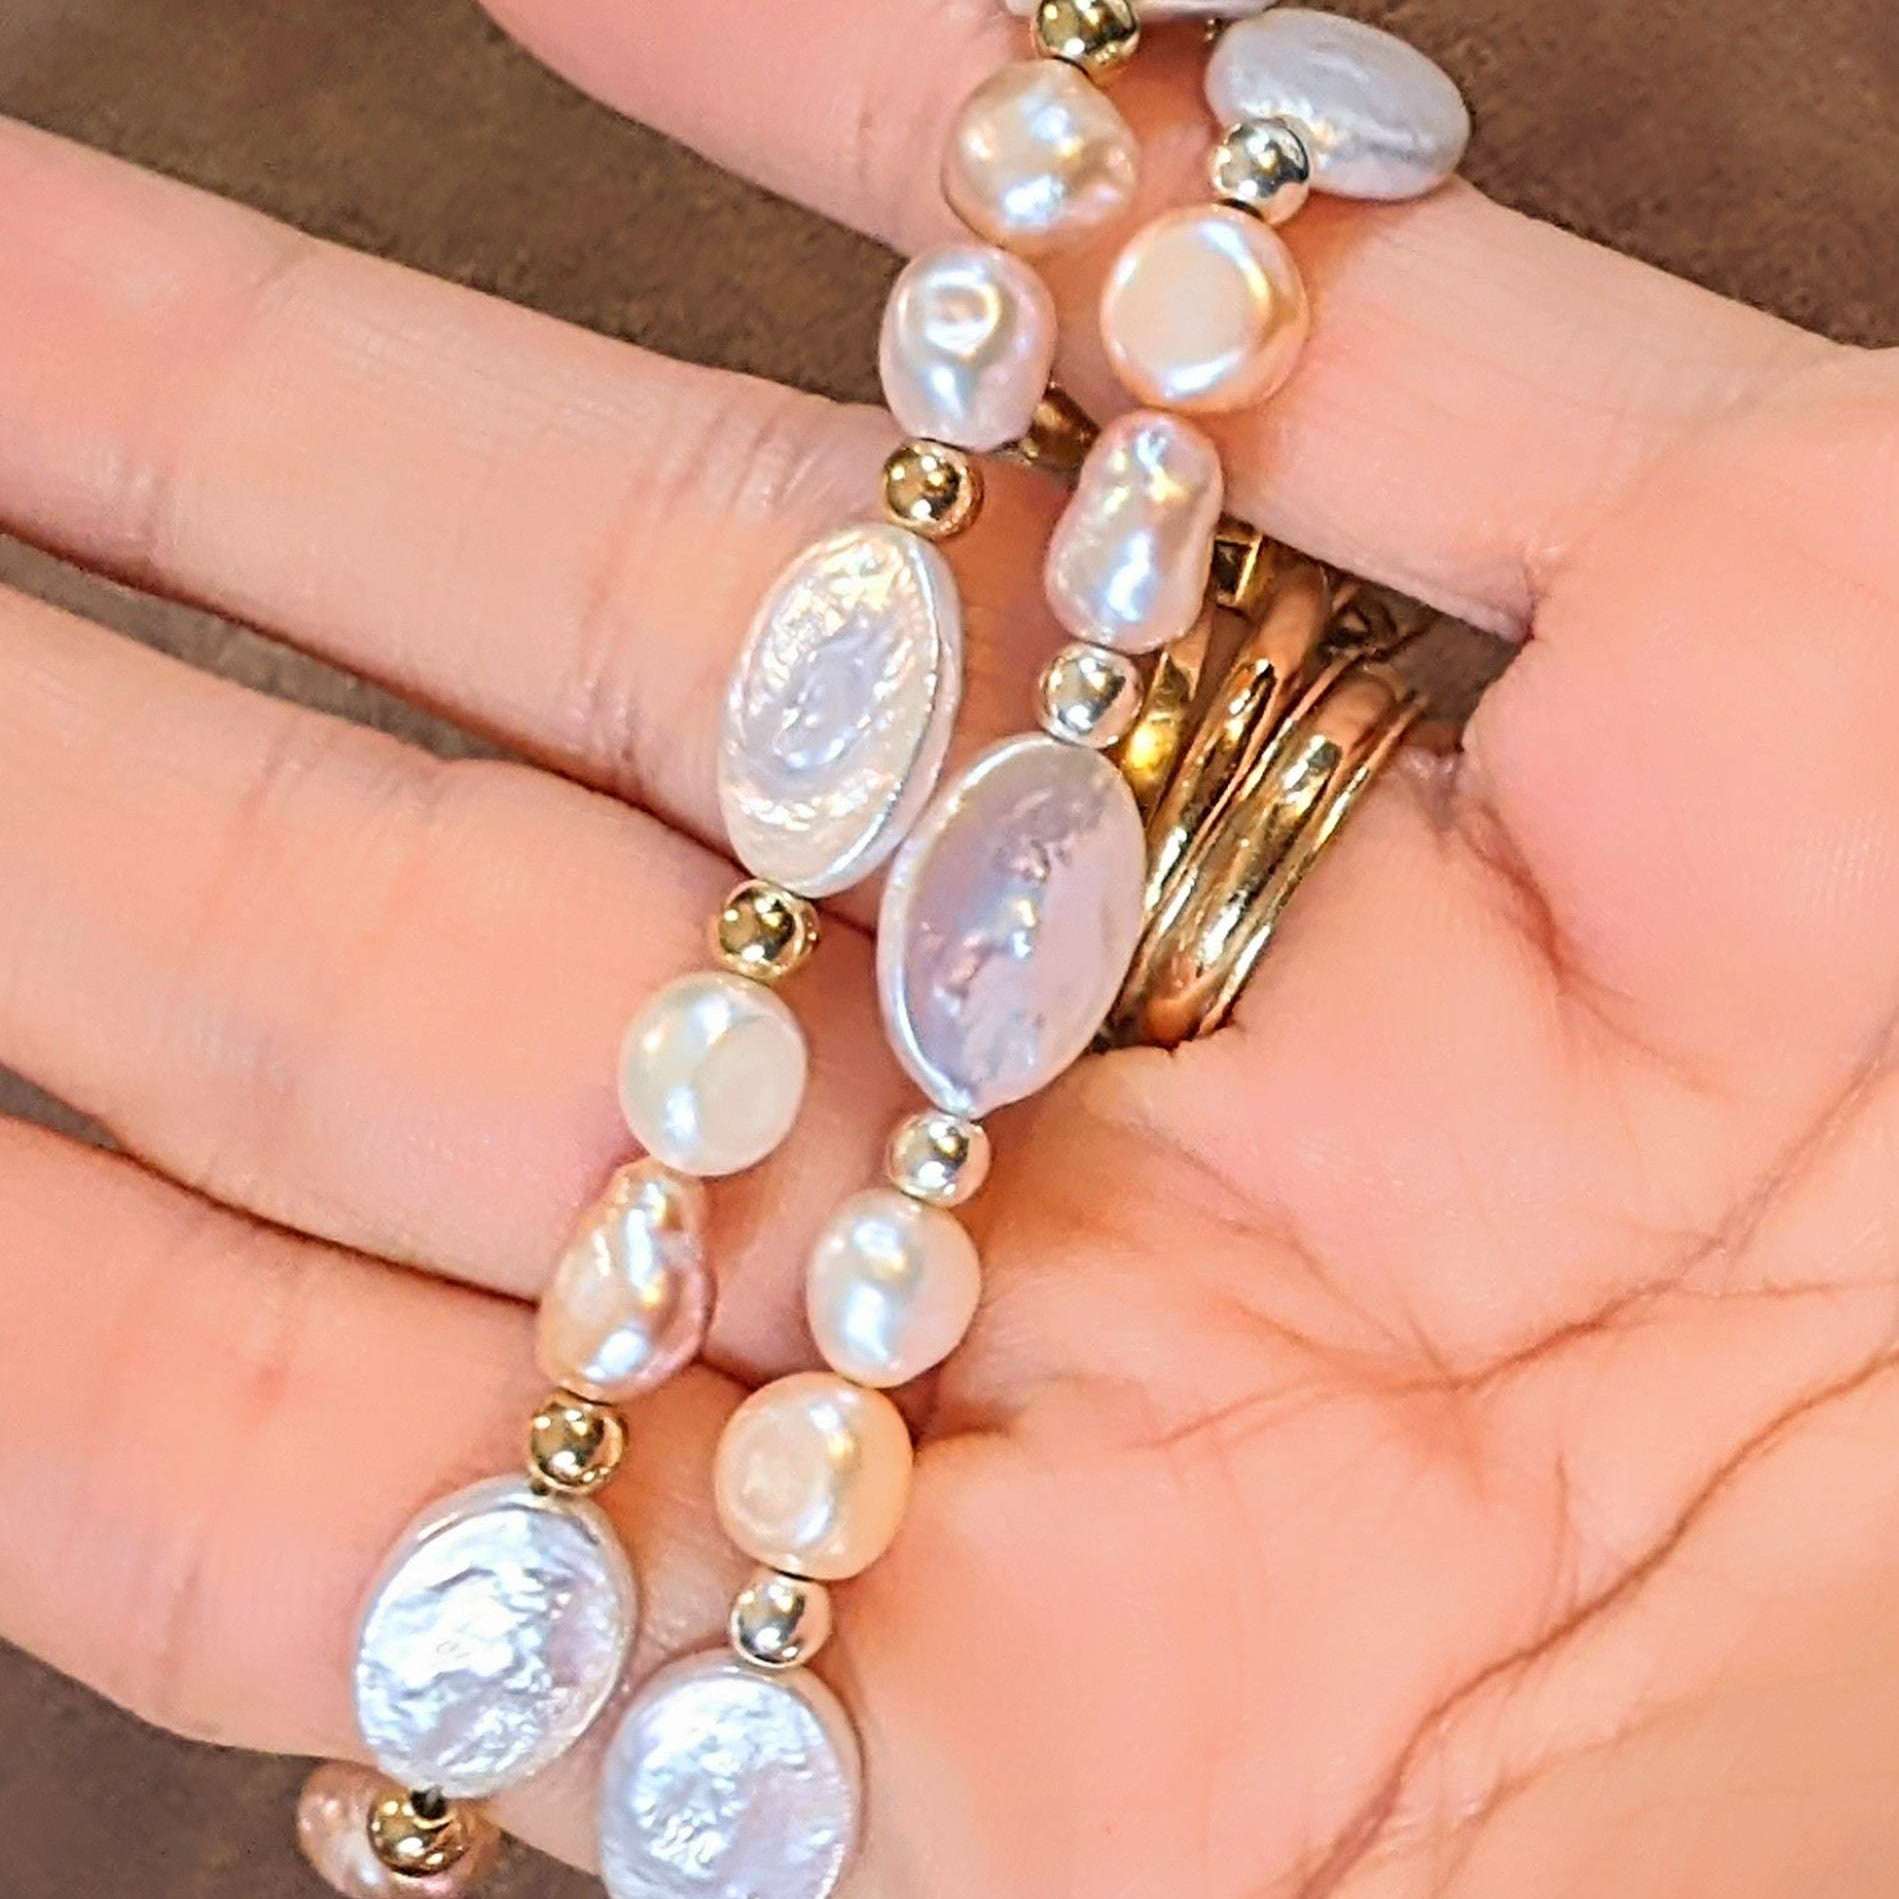 personalized bracelets Ideas, Craft Ideas on personalized bracelets |  Silver bead bracelet, Beaded jewelry, Beaded bracelets